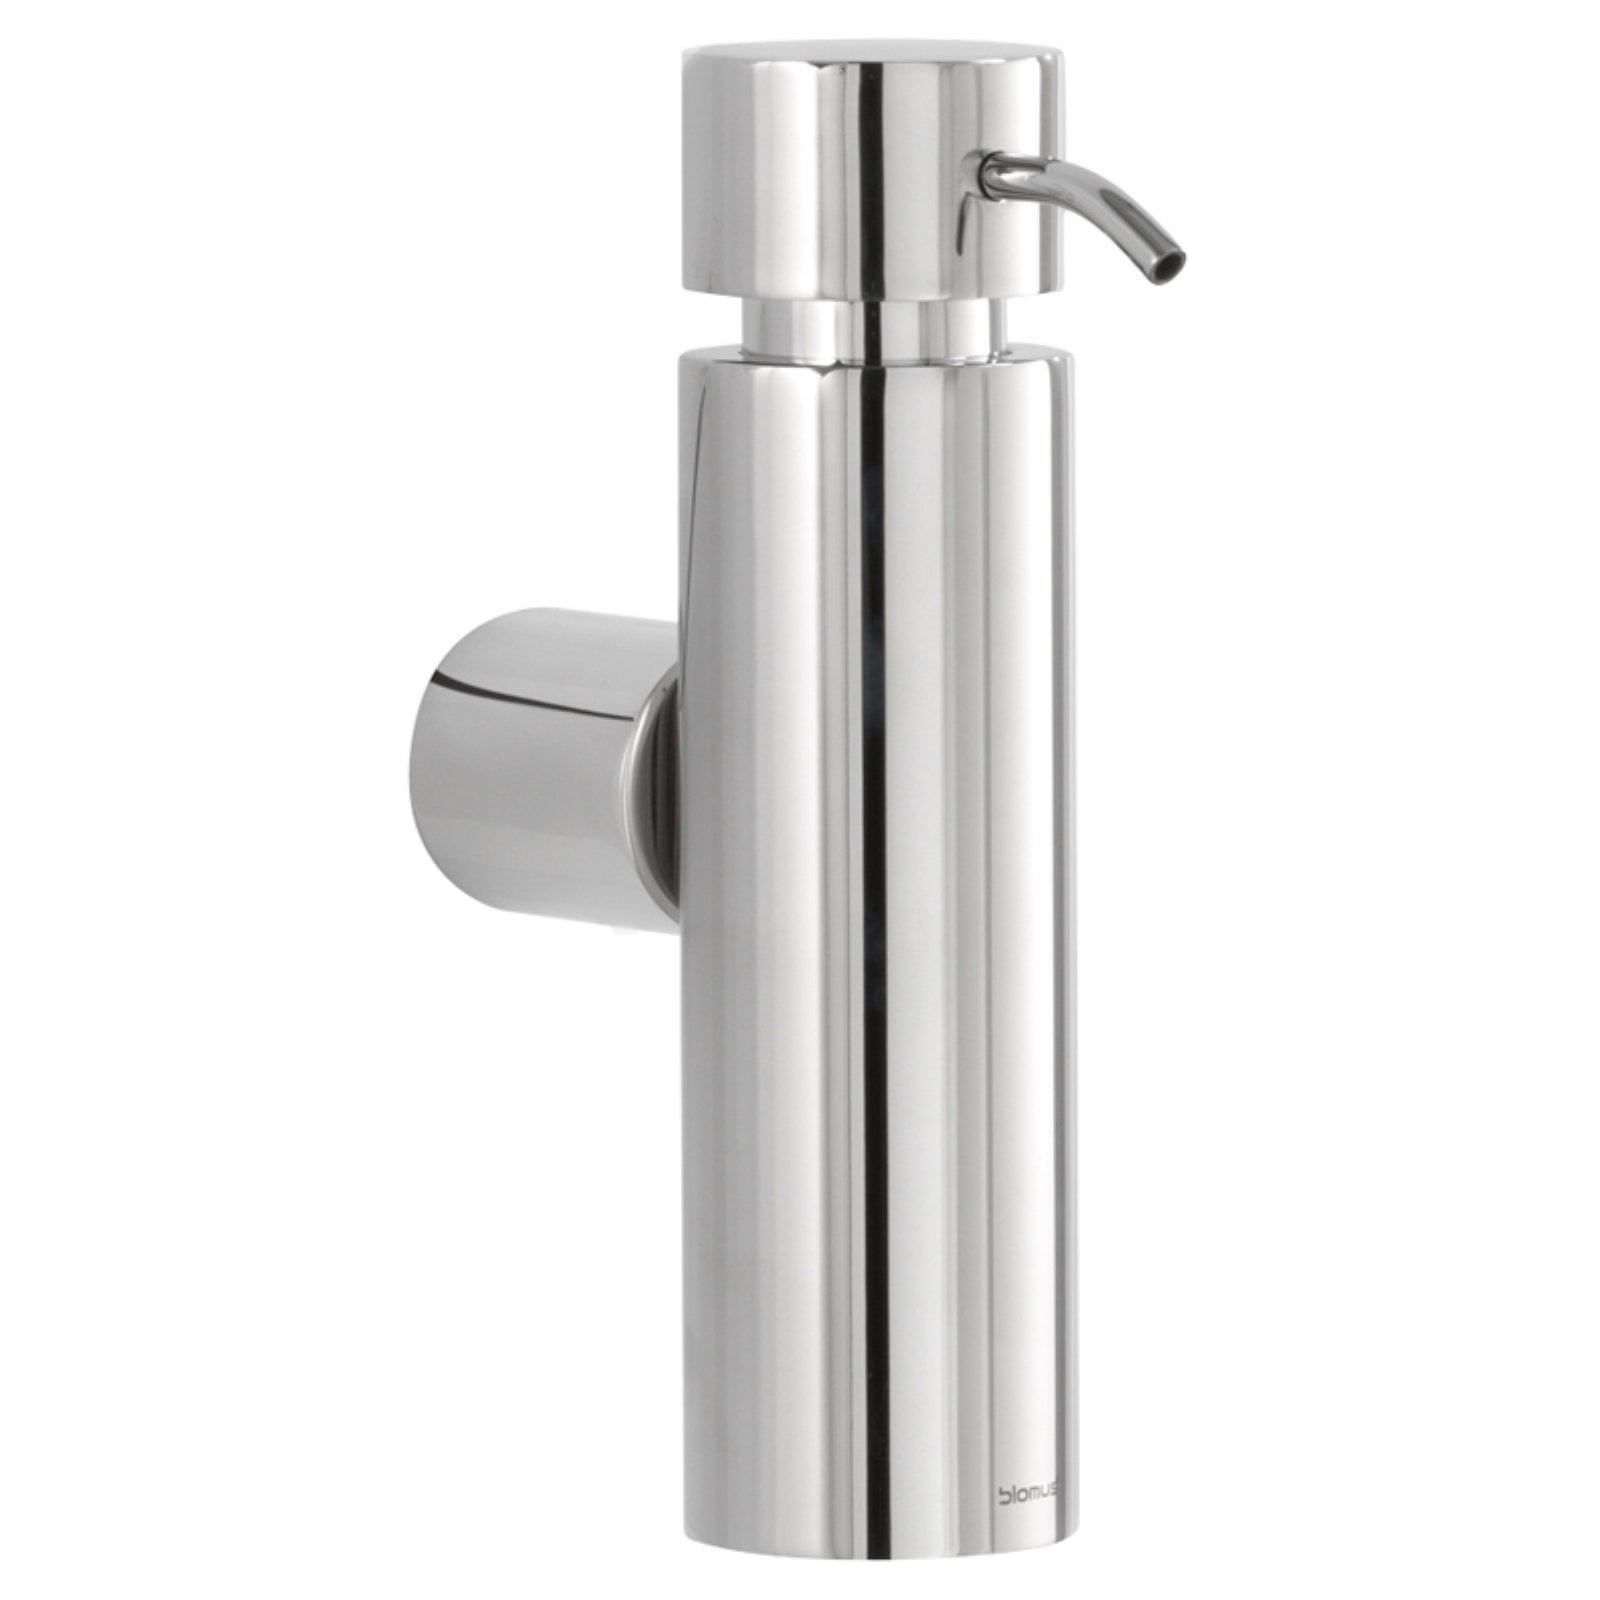 Blomus 68416 stainless steel wall-mounted soap dispenser 